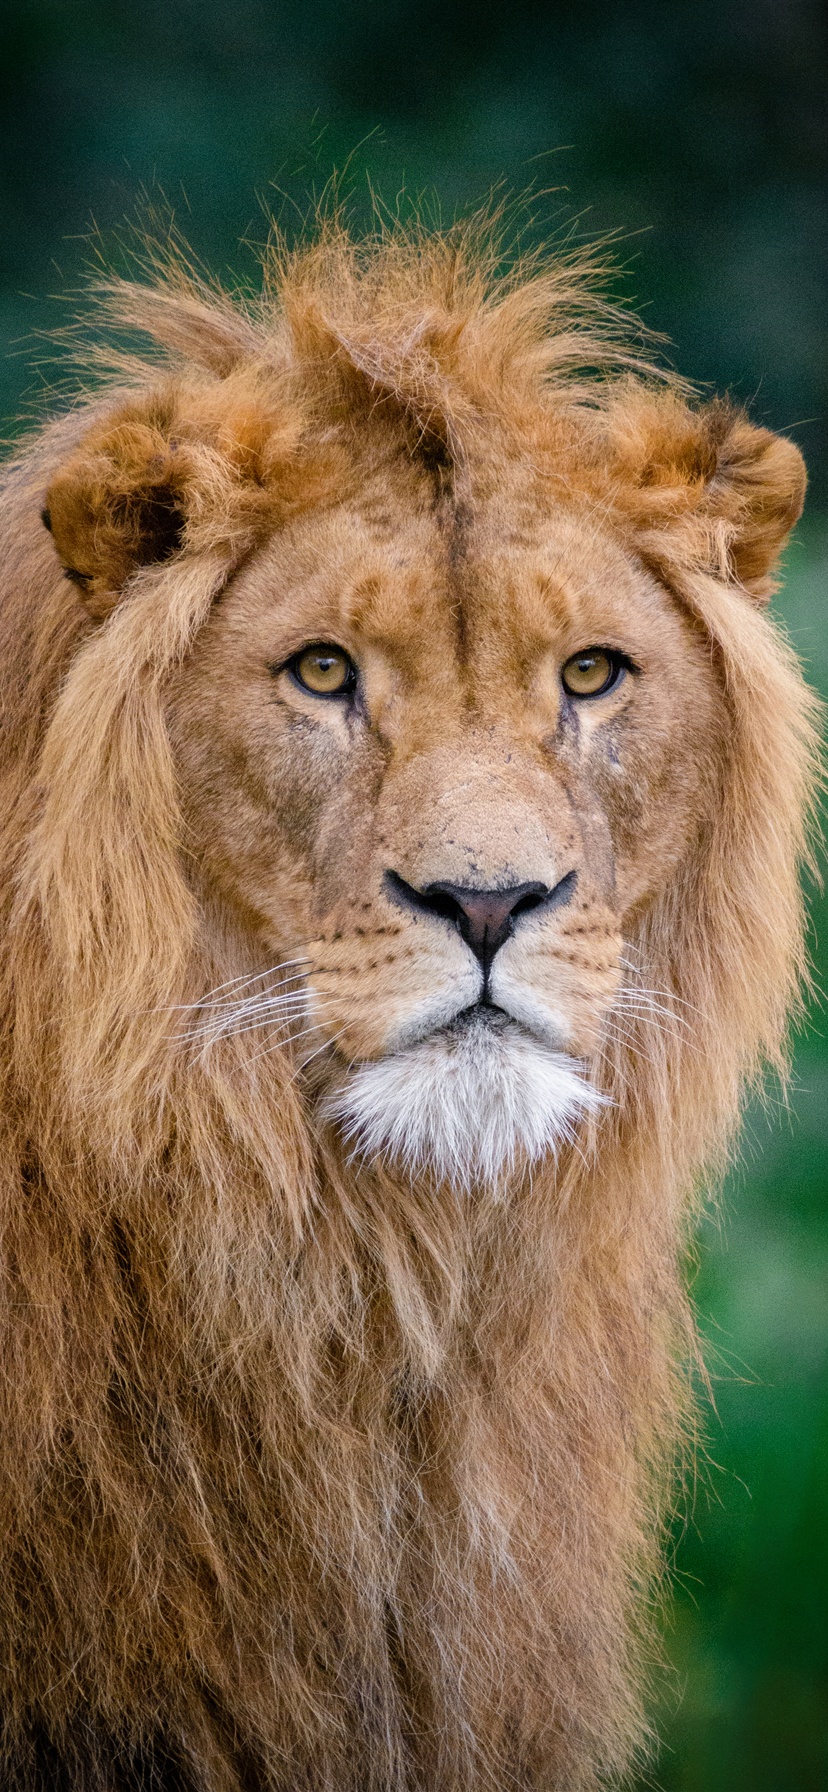 Lion King Images Download - HD Wallpaper 